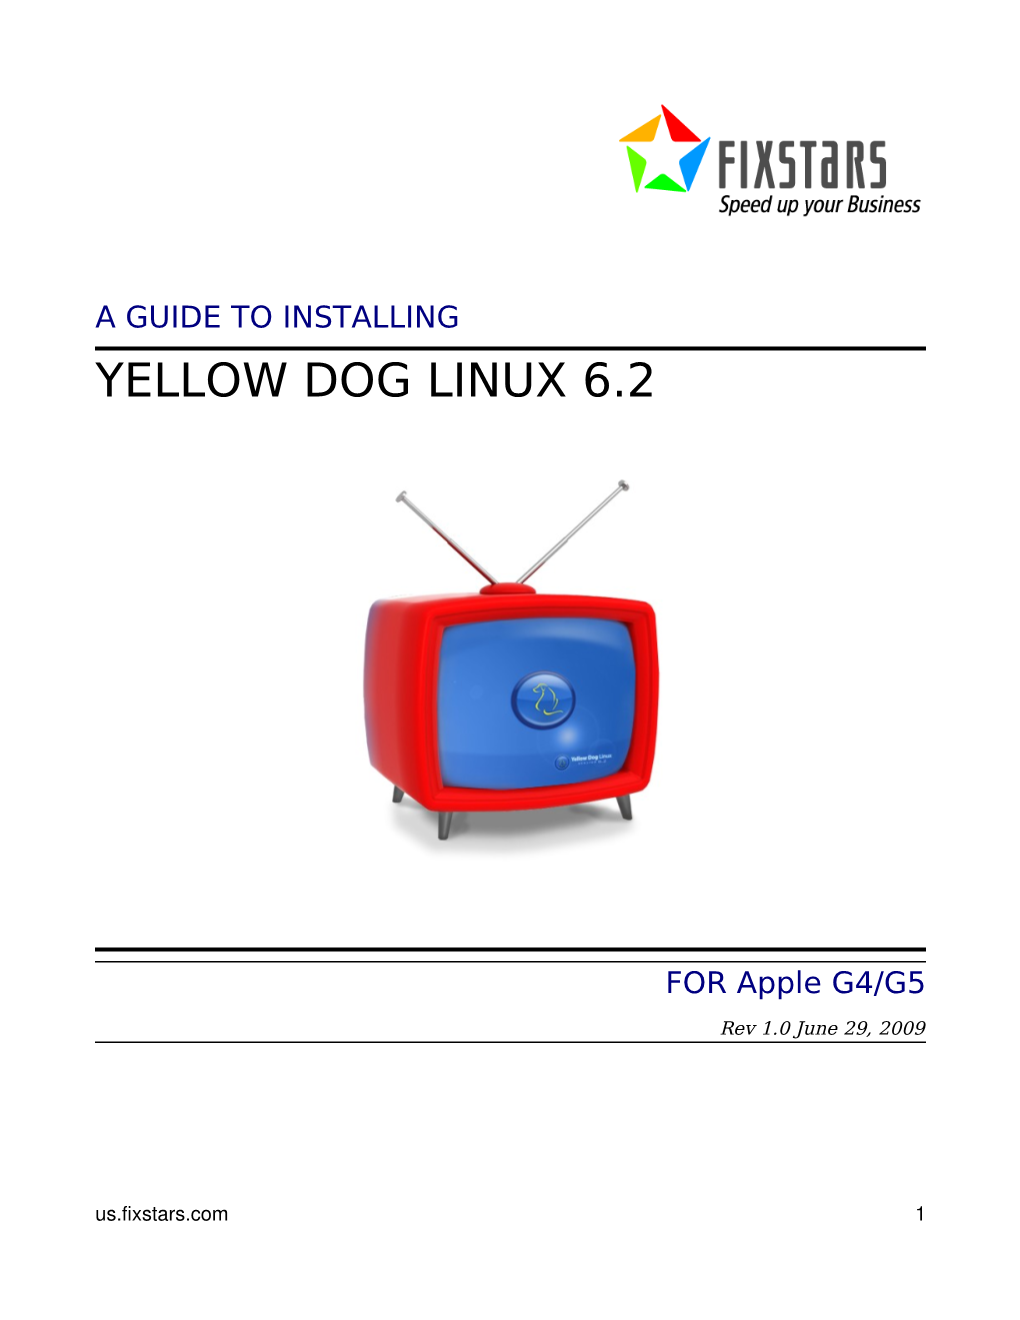 Yellow Dog Linux 6.2